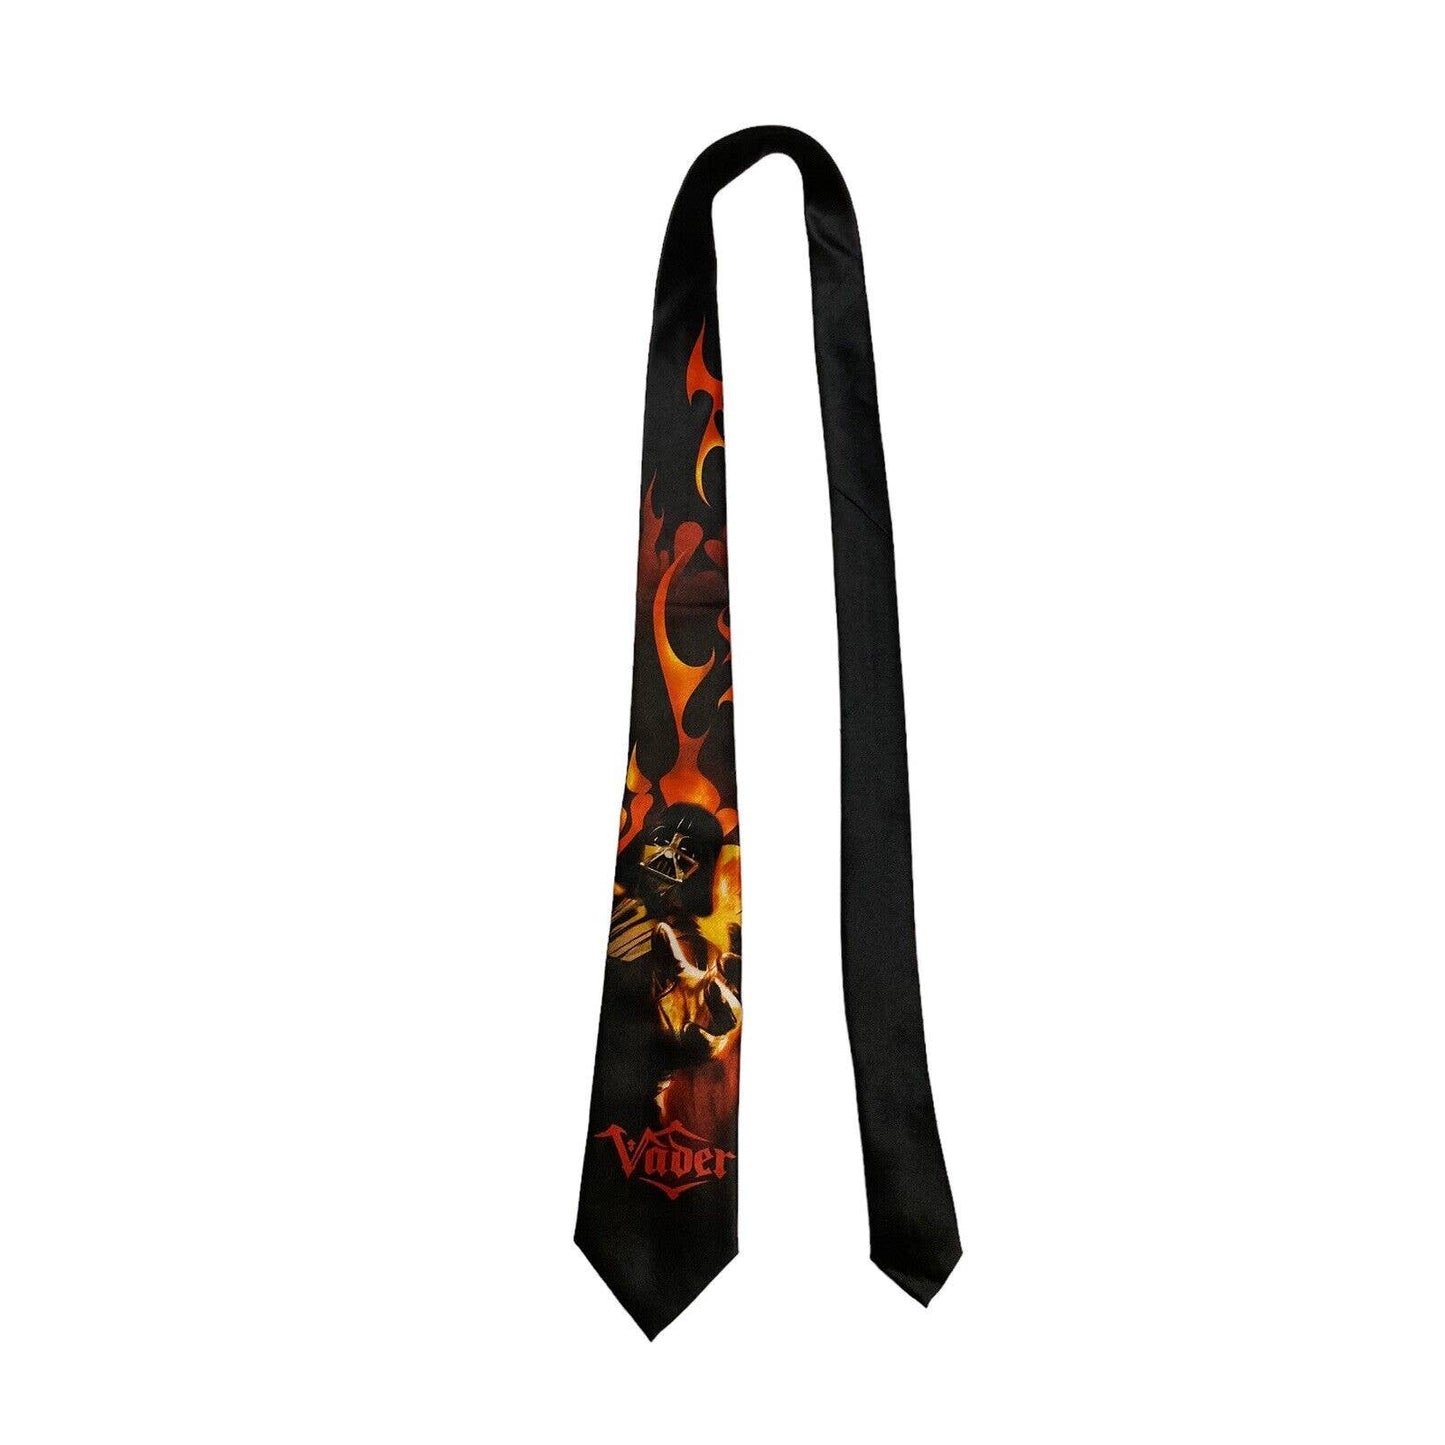 Star Wars Darth Vader Force Novelty Necktie Short Length